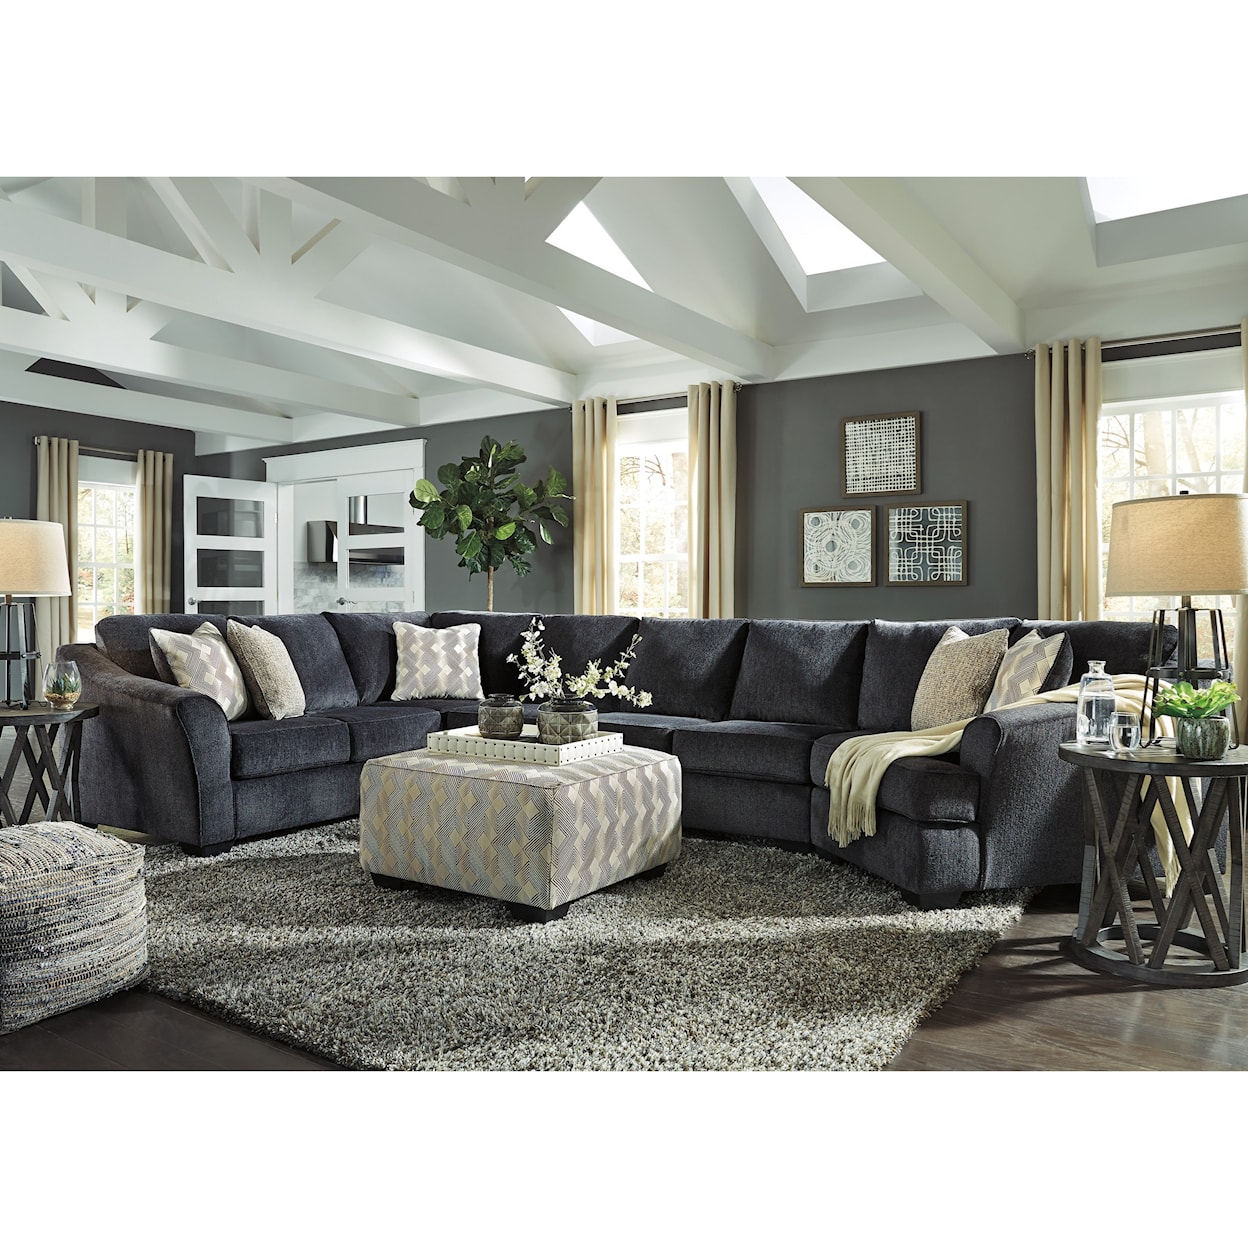 Ashley Furniture Signature Design Eltmann Stationary Living Room Group